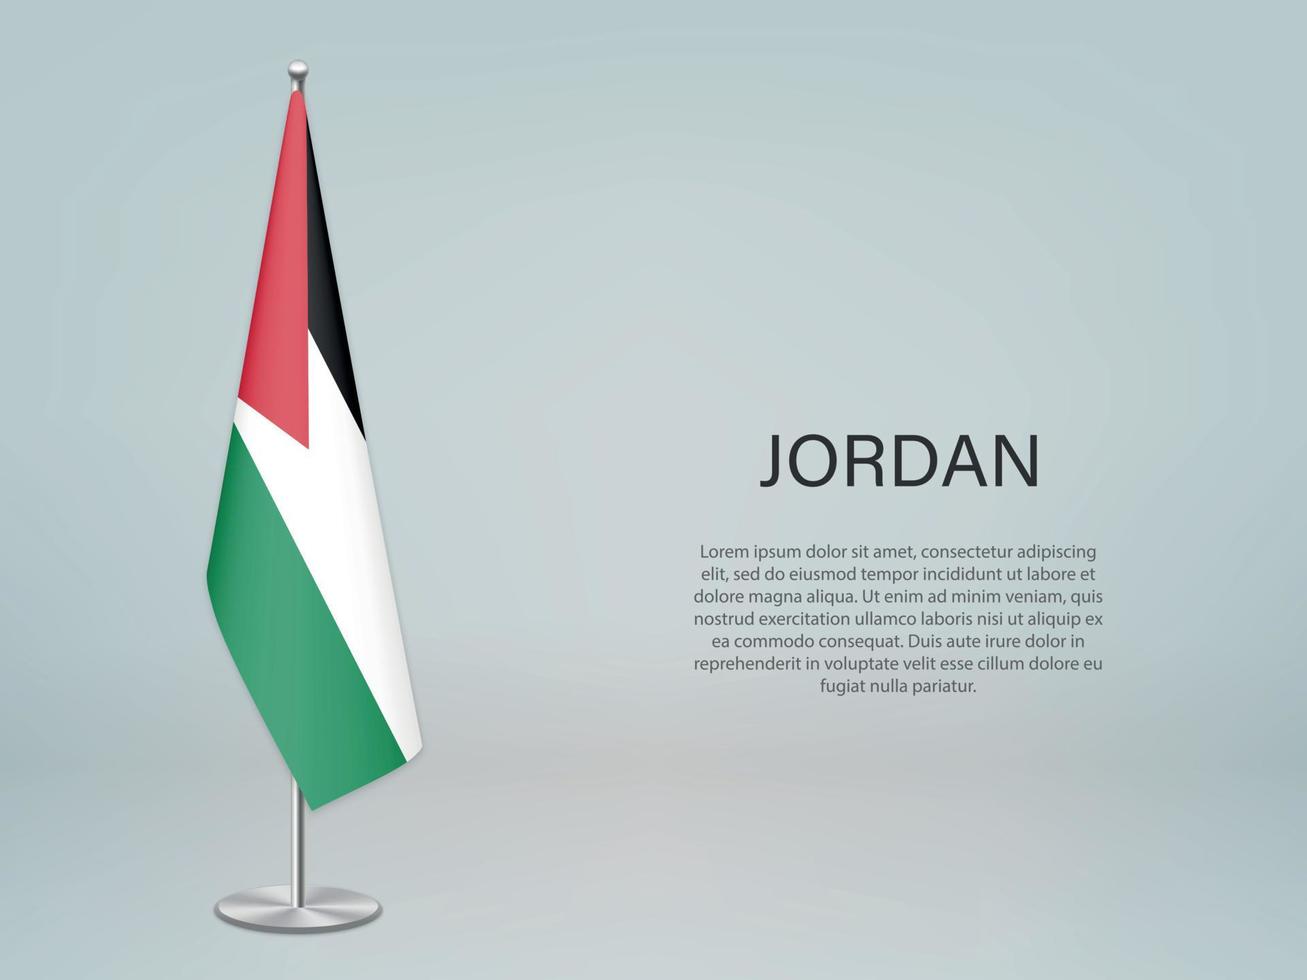 Jordan hanging flag on stand. Template forconference banner vector